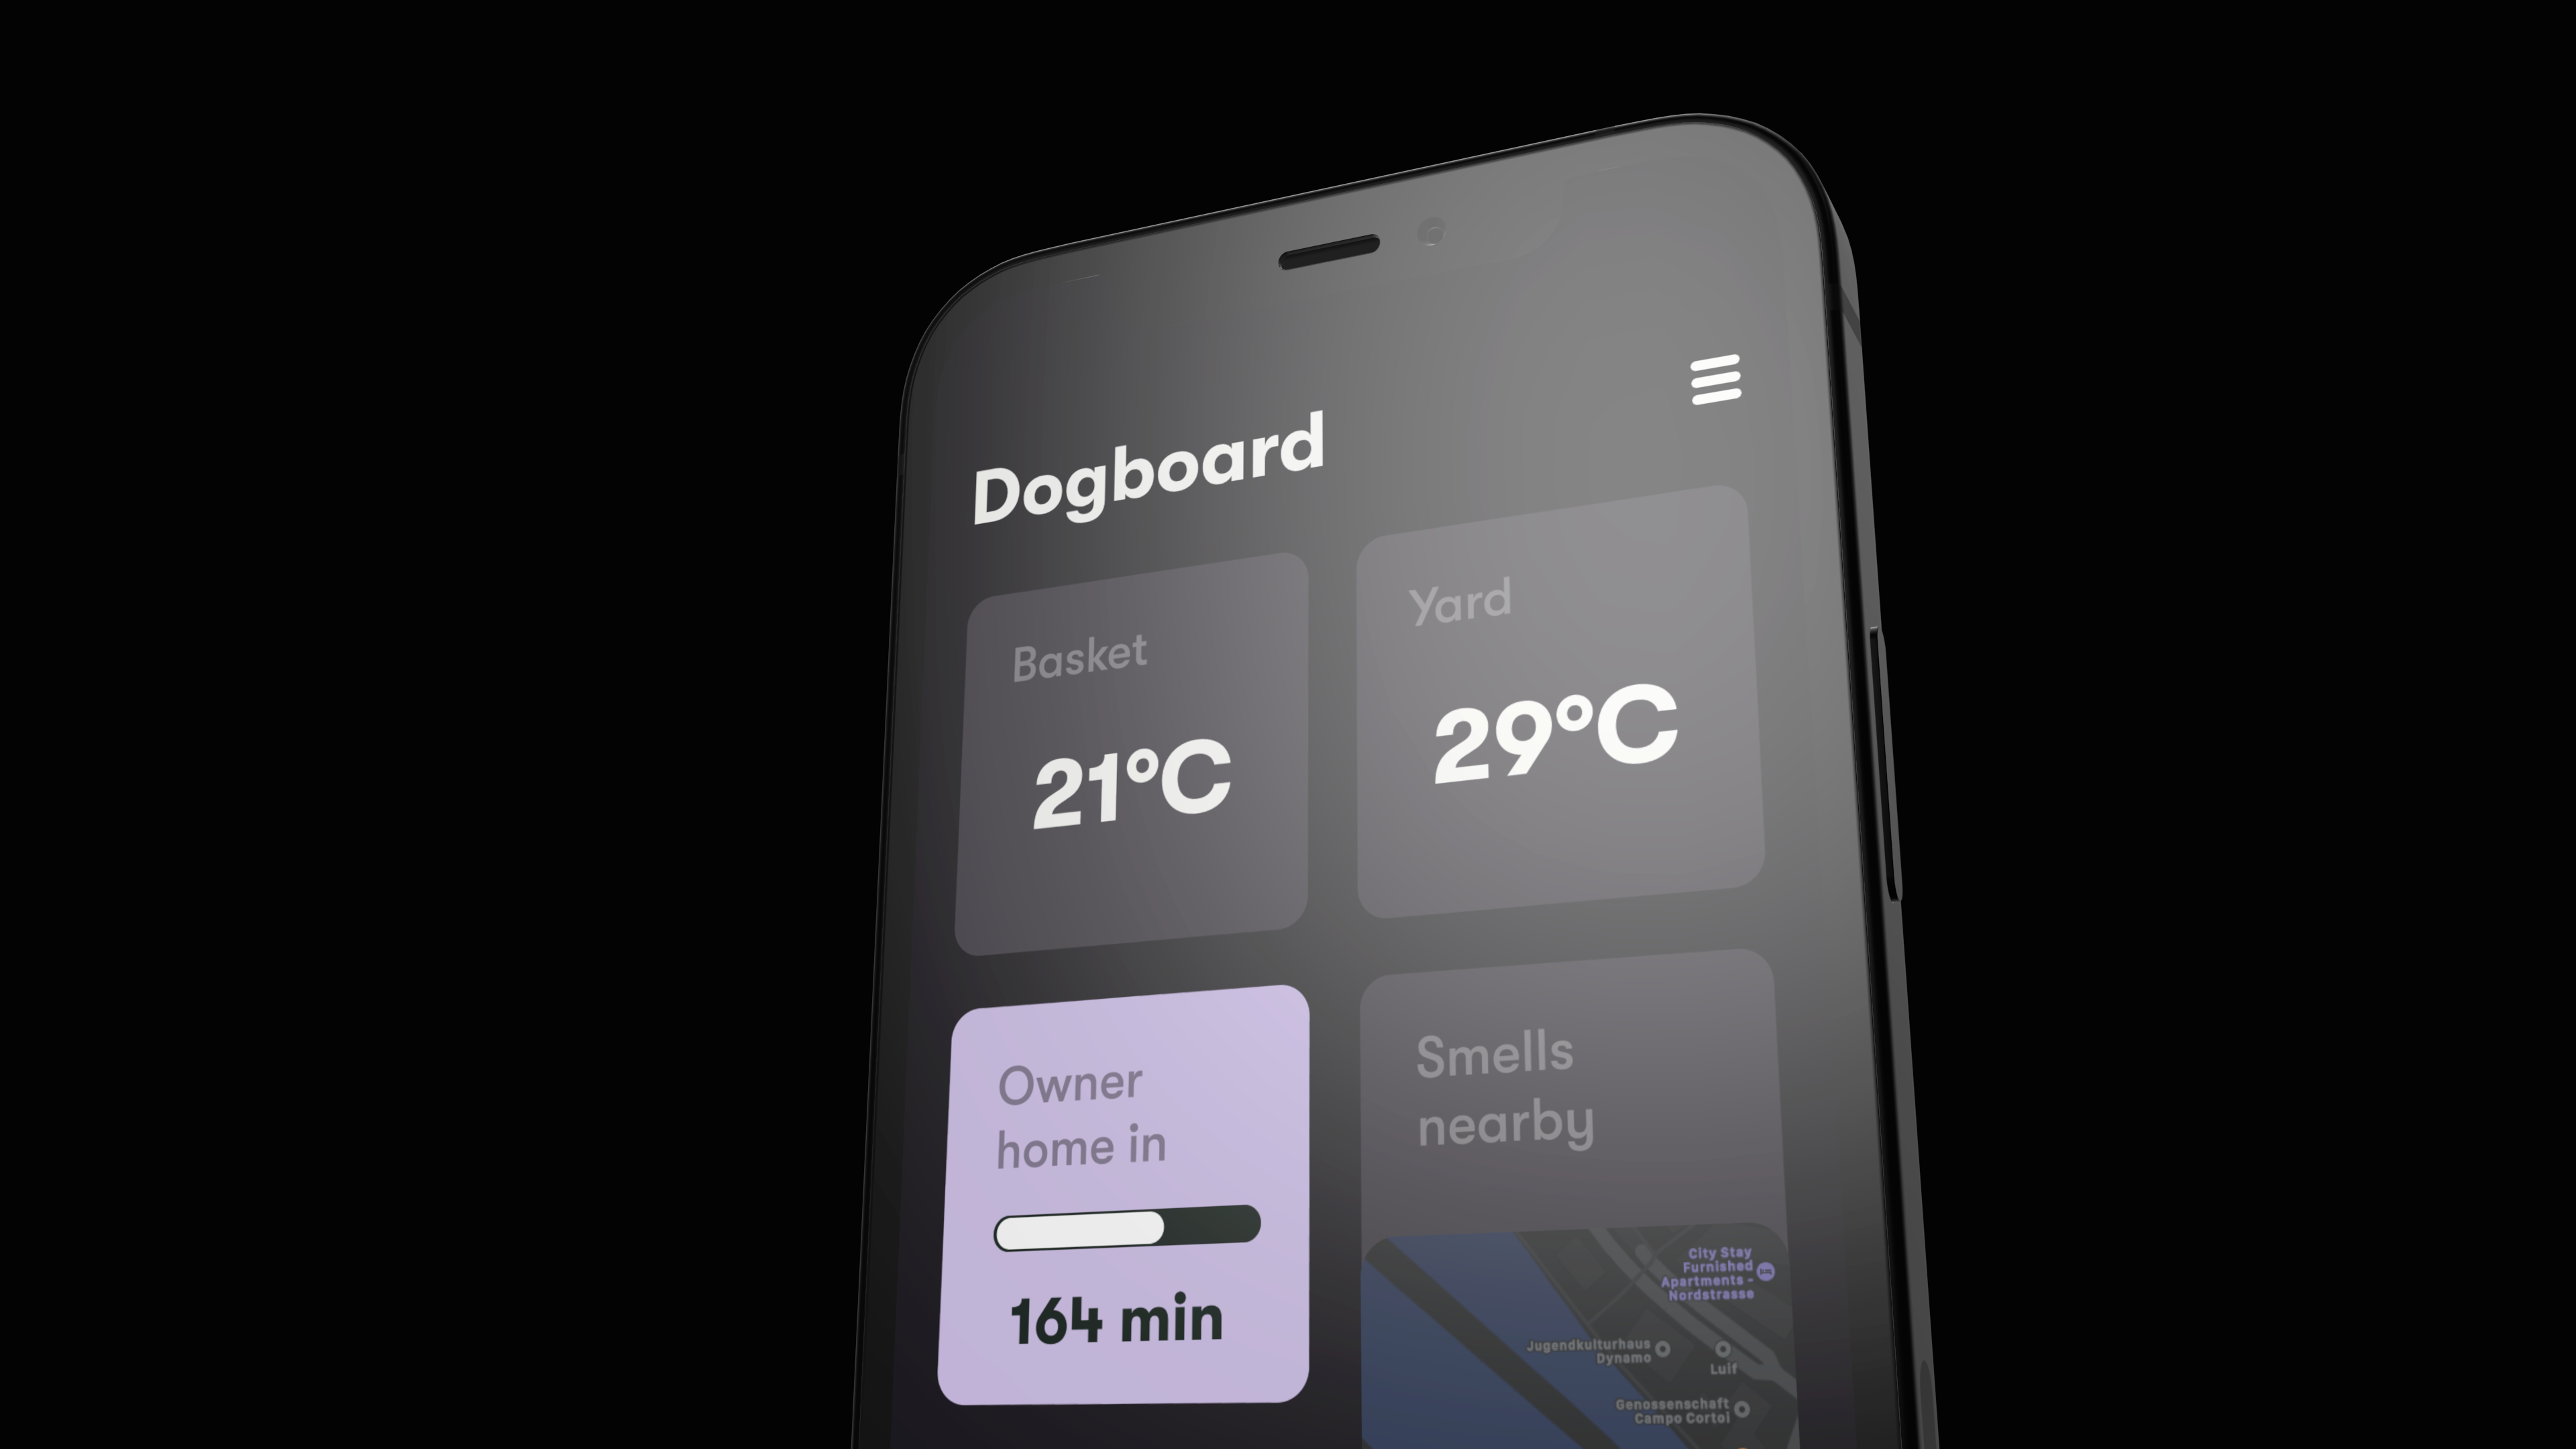 Dashboard UI shown on mockup display